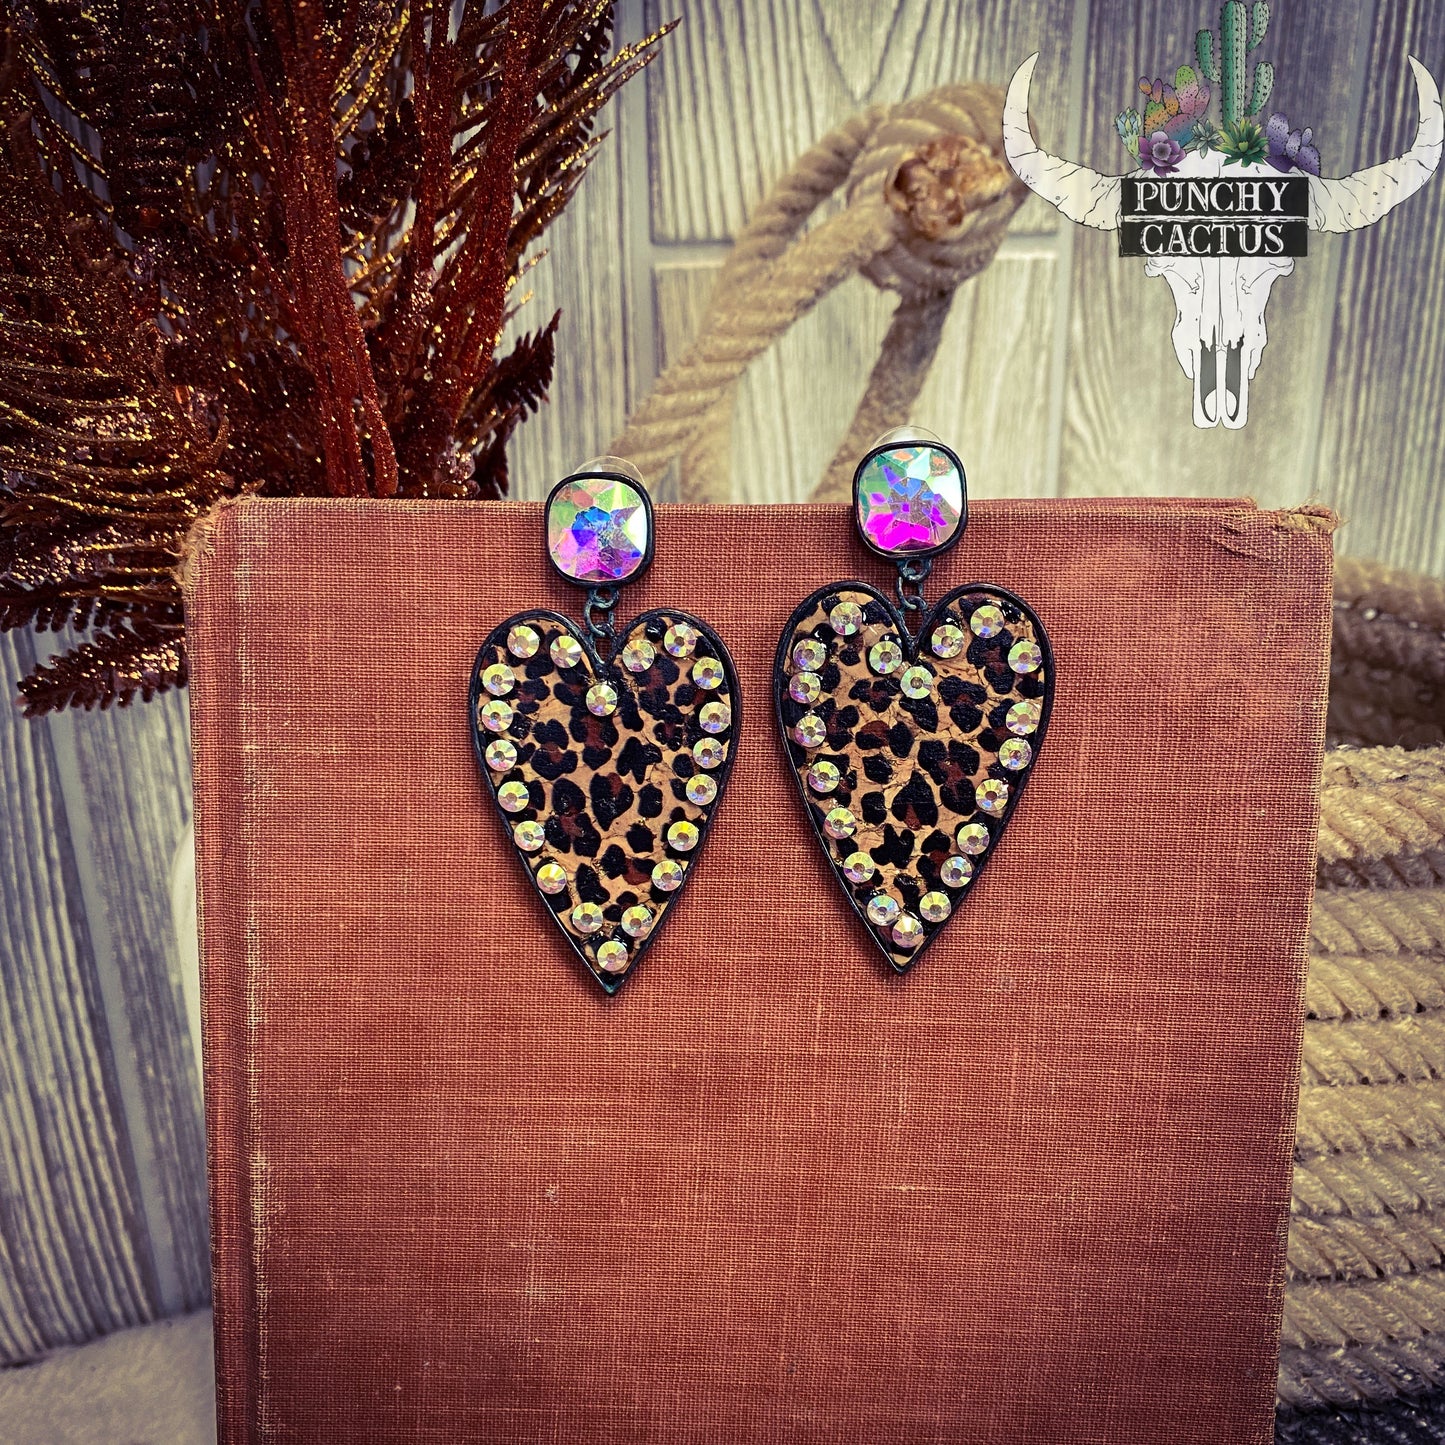 black metal heart shaped earrings with cheetah print center and rhinestones around the edge